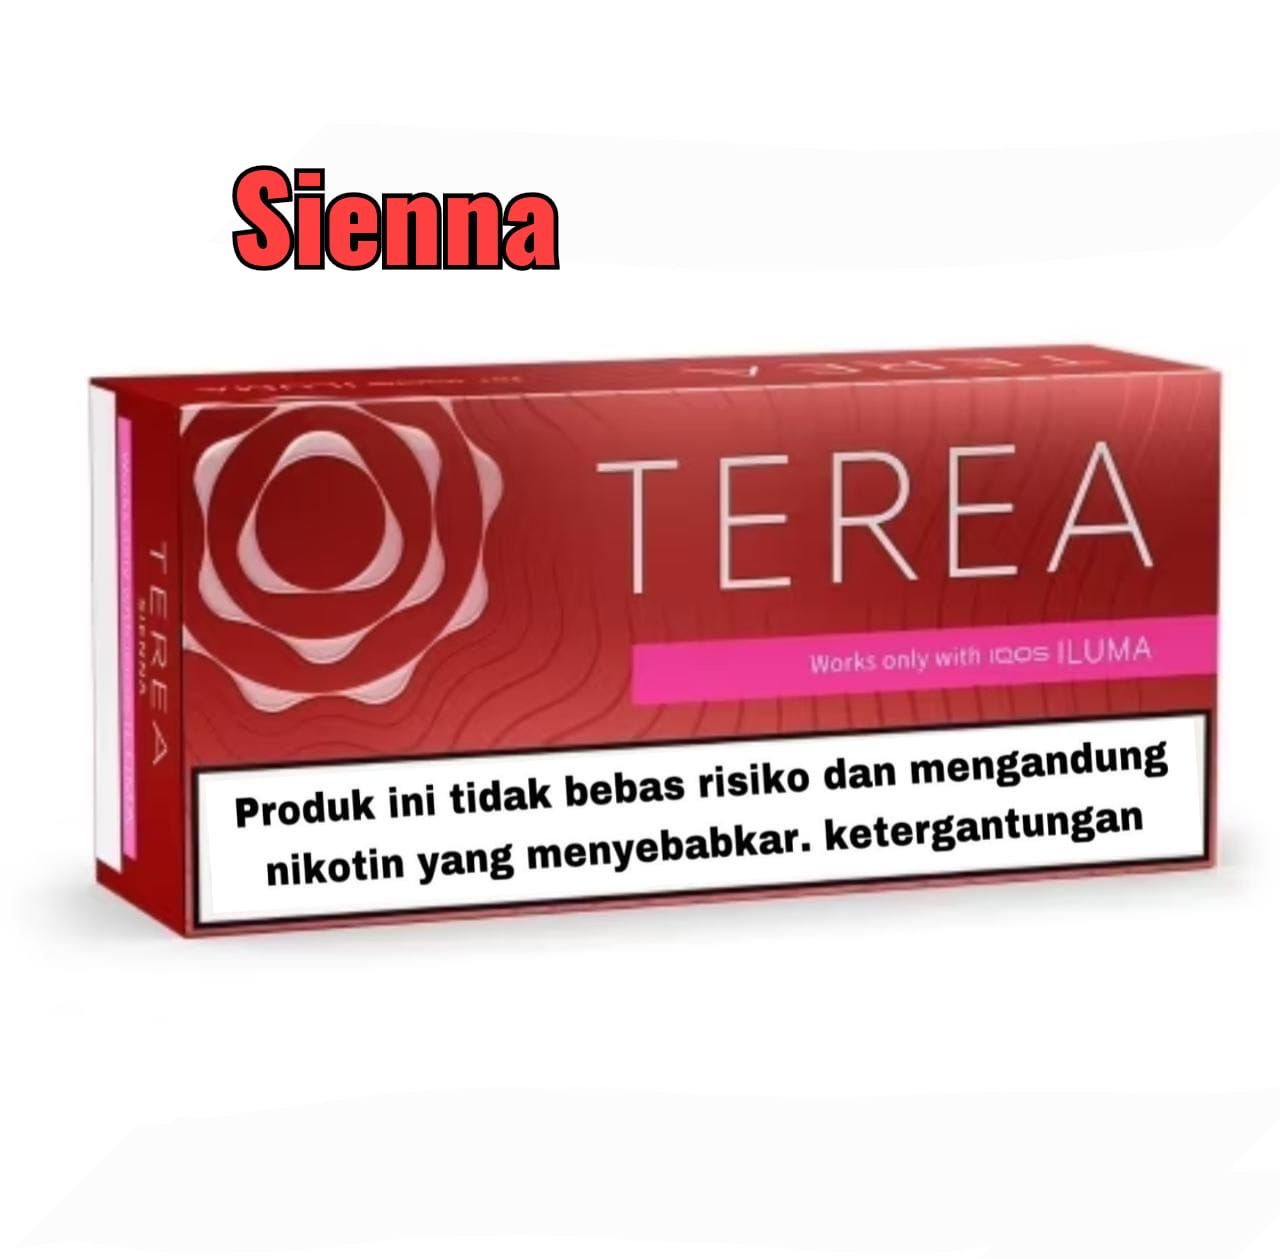 New IQOS Terea Sienna Indonesian Best Price in UAE